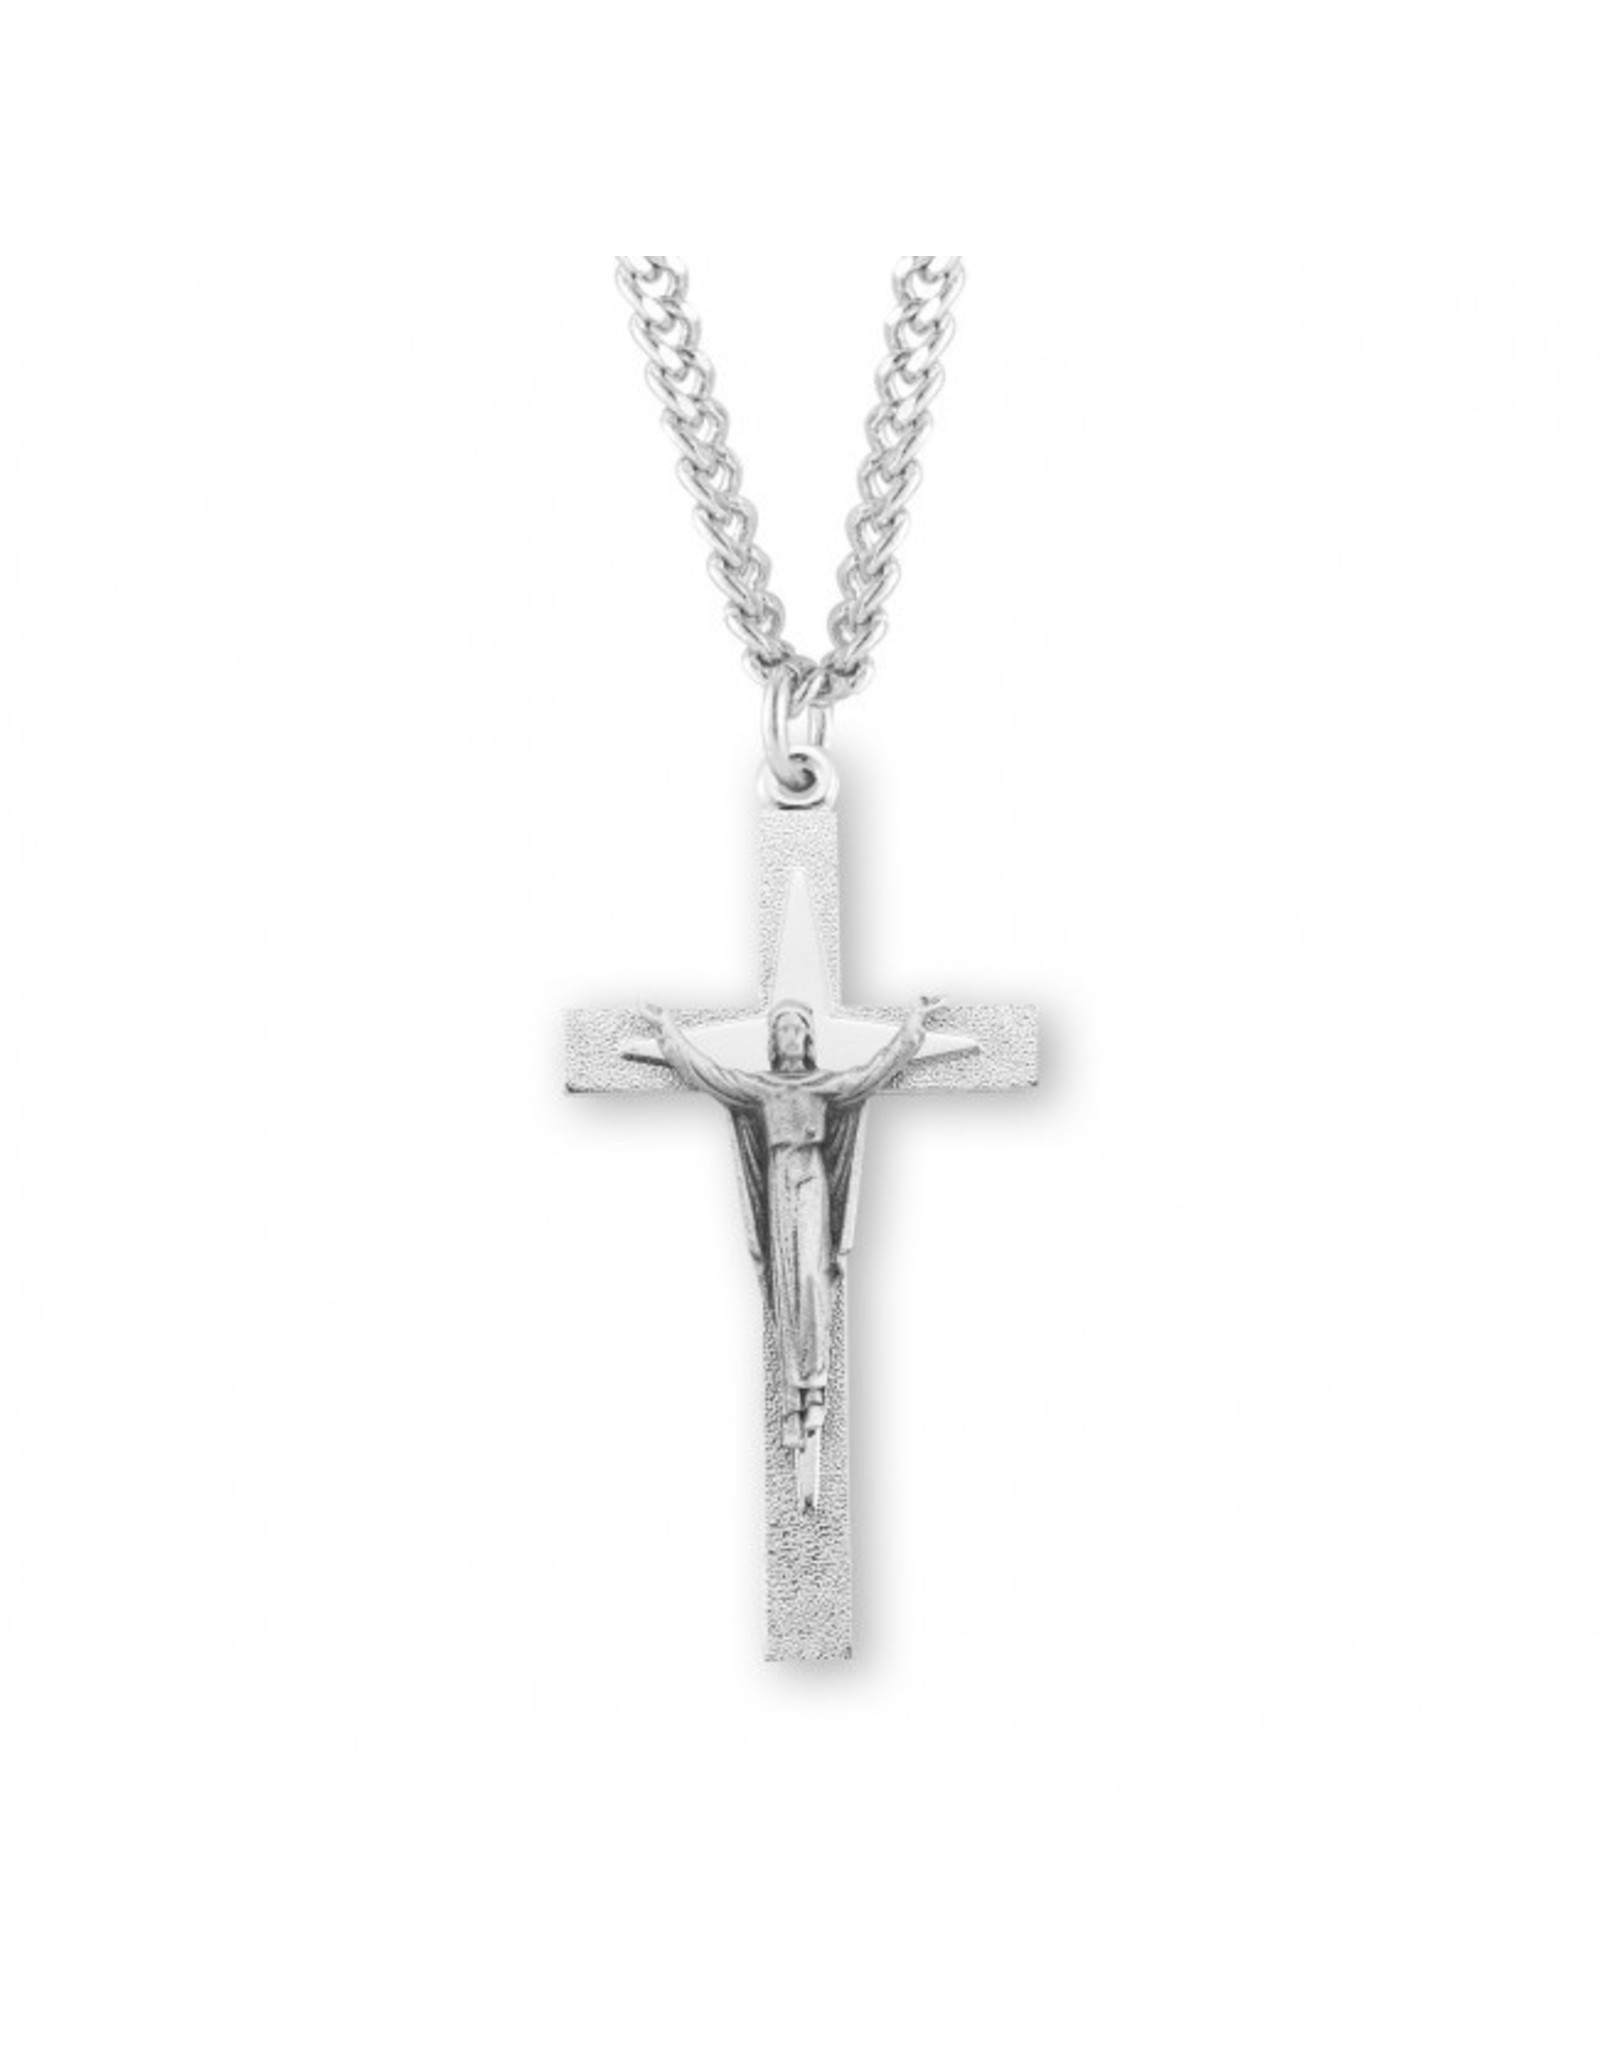 HMH Risen Christ Crucifix Medal, Sterling Silver, 24" Chain